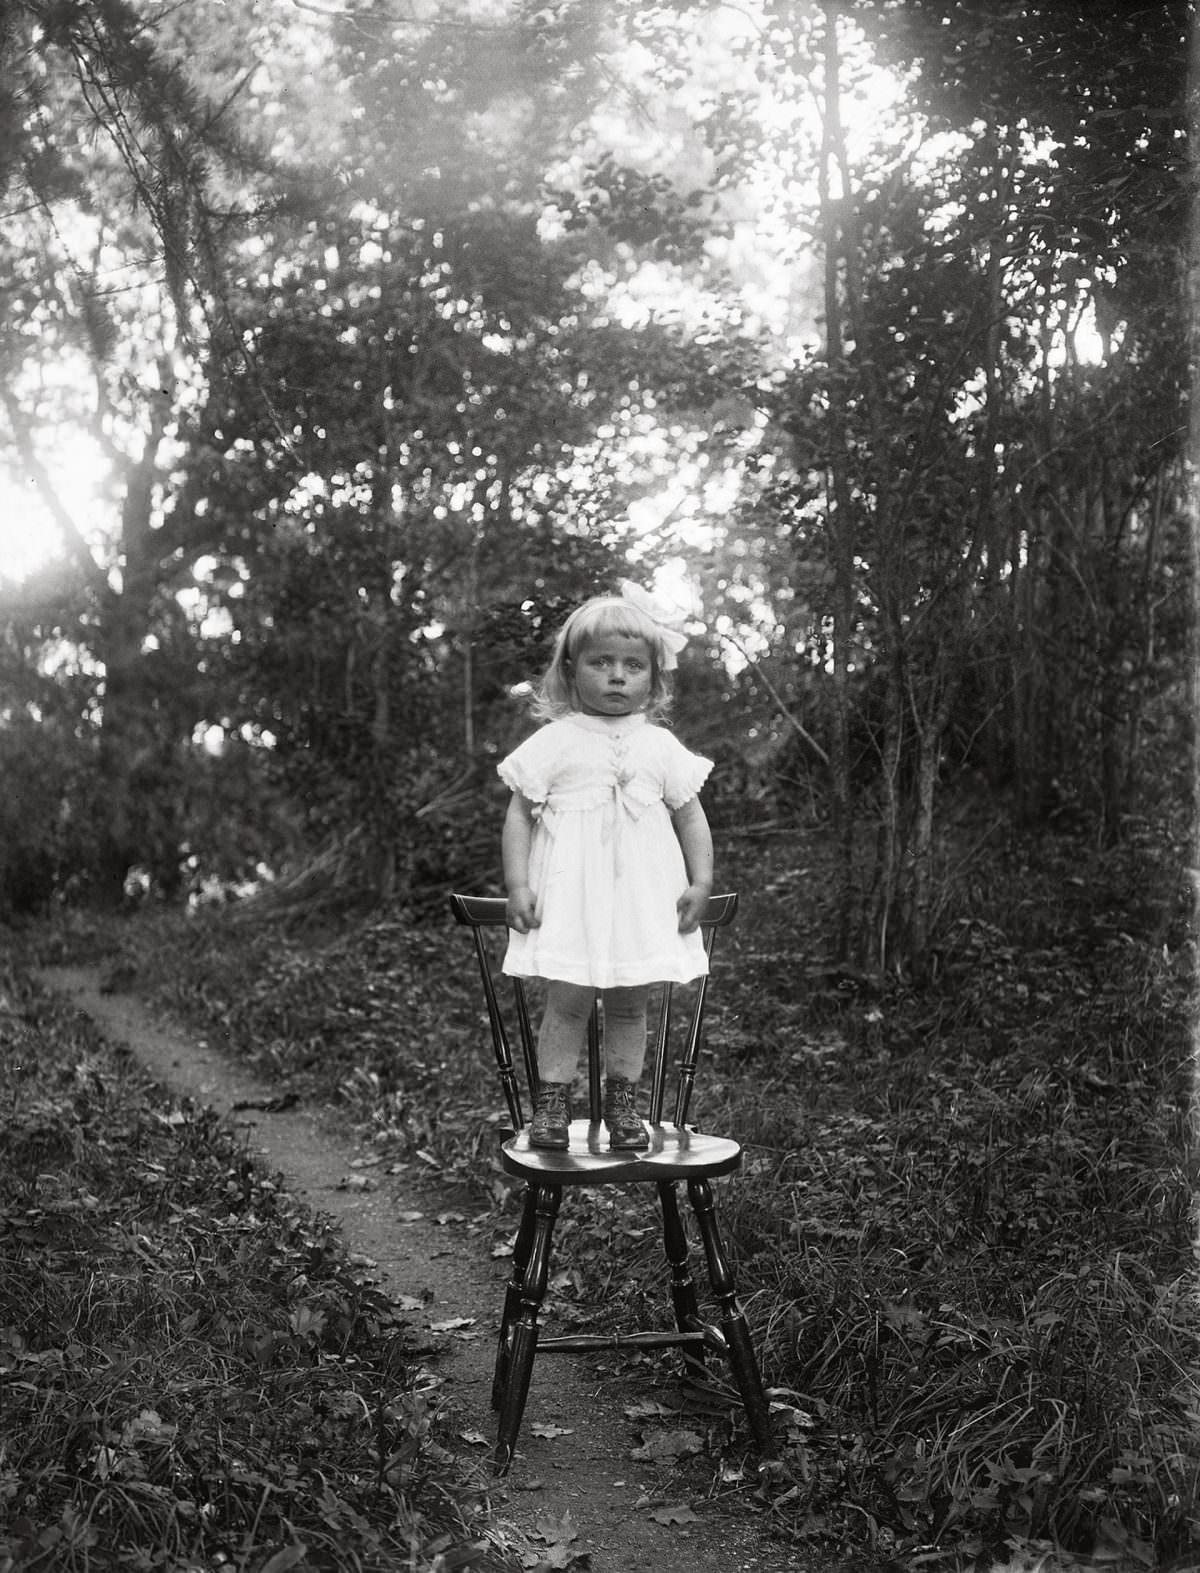 Ljung’s daughter standing by herself on a chair, Torstunaby, Torstuna parish, 1920